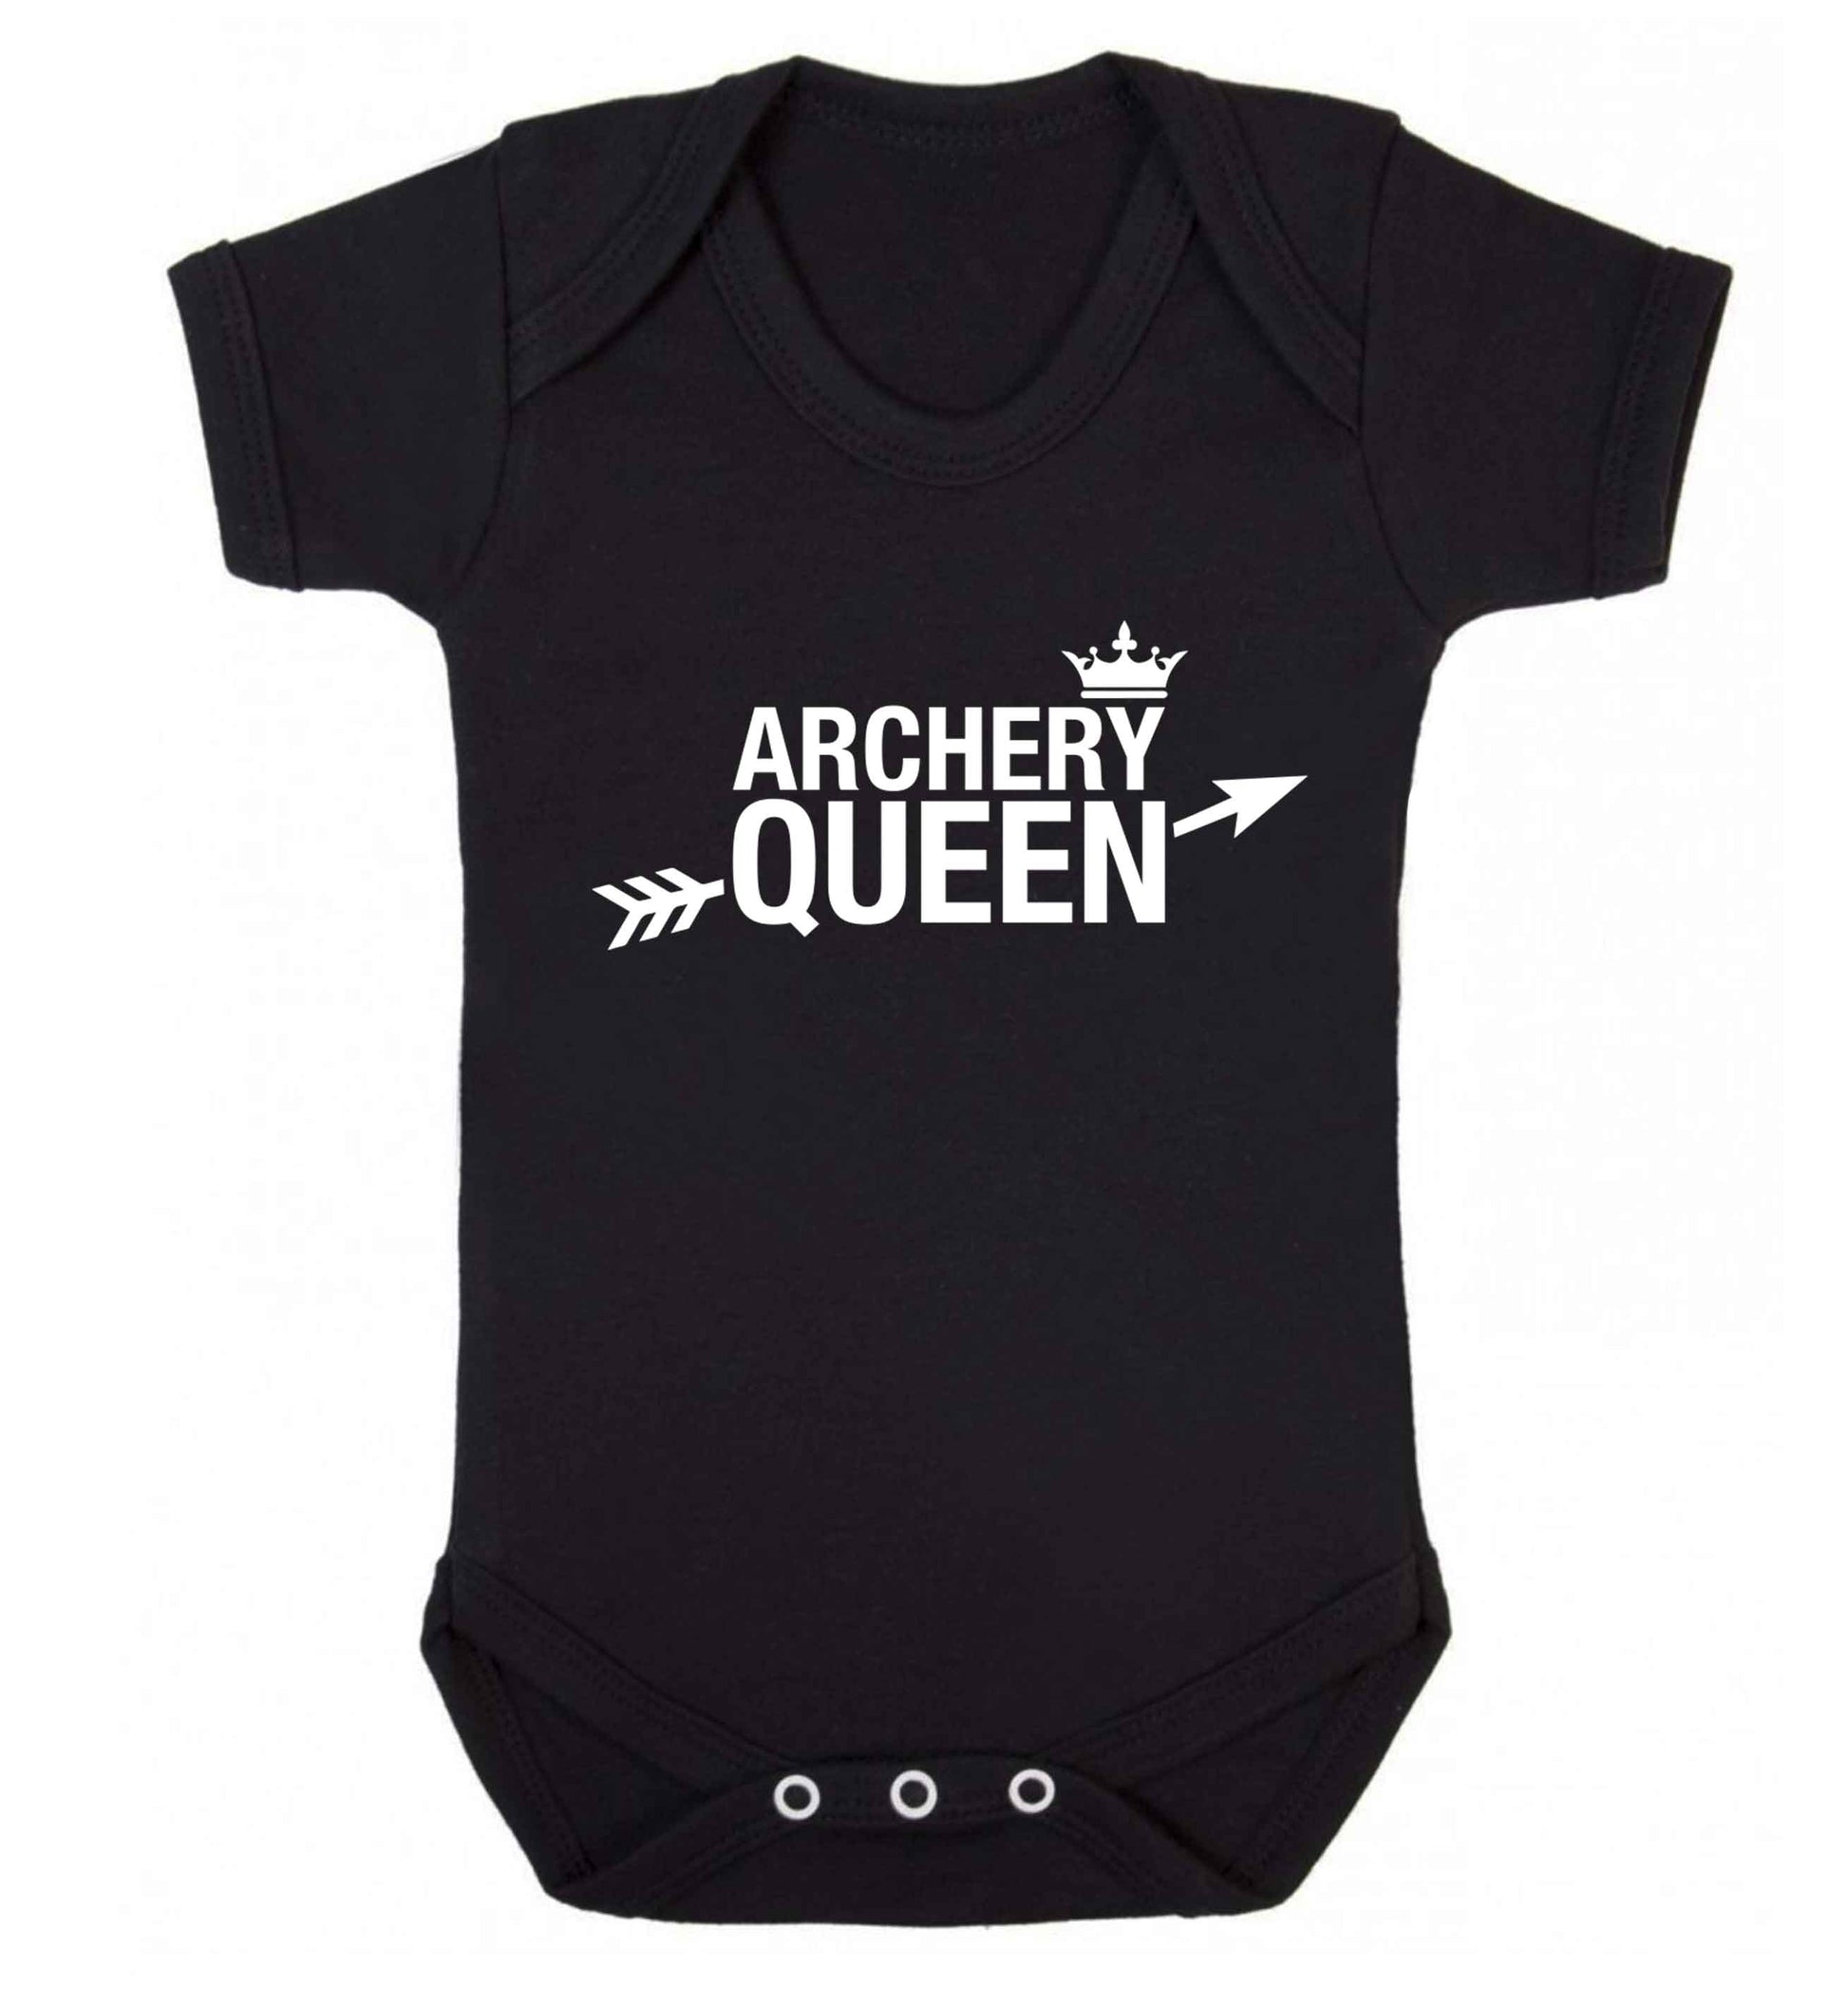 Archery queen Baby Vest black 18-24 months